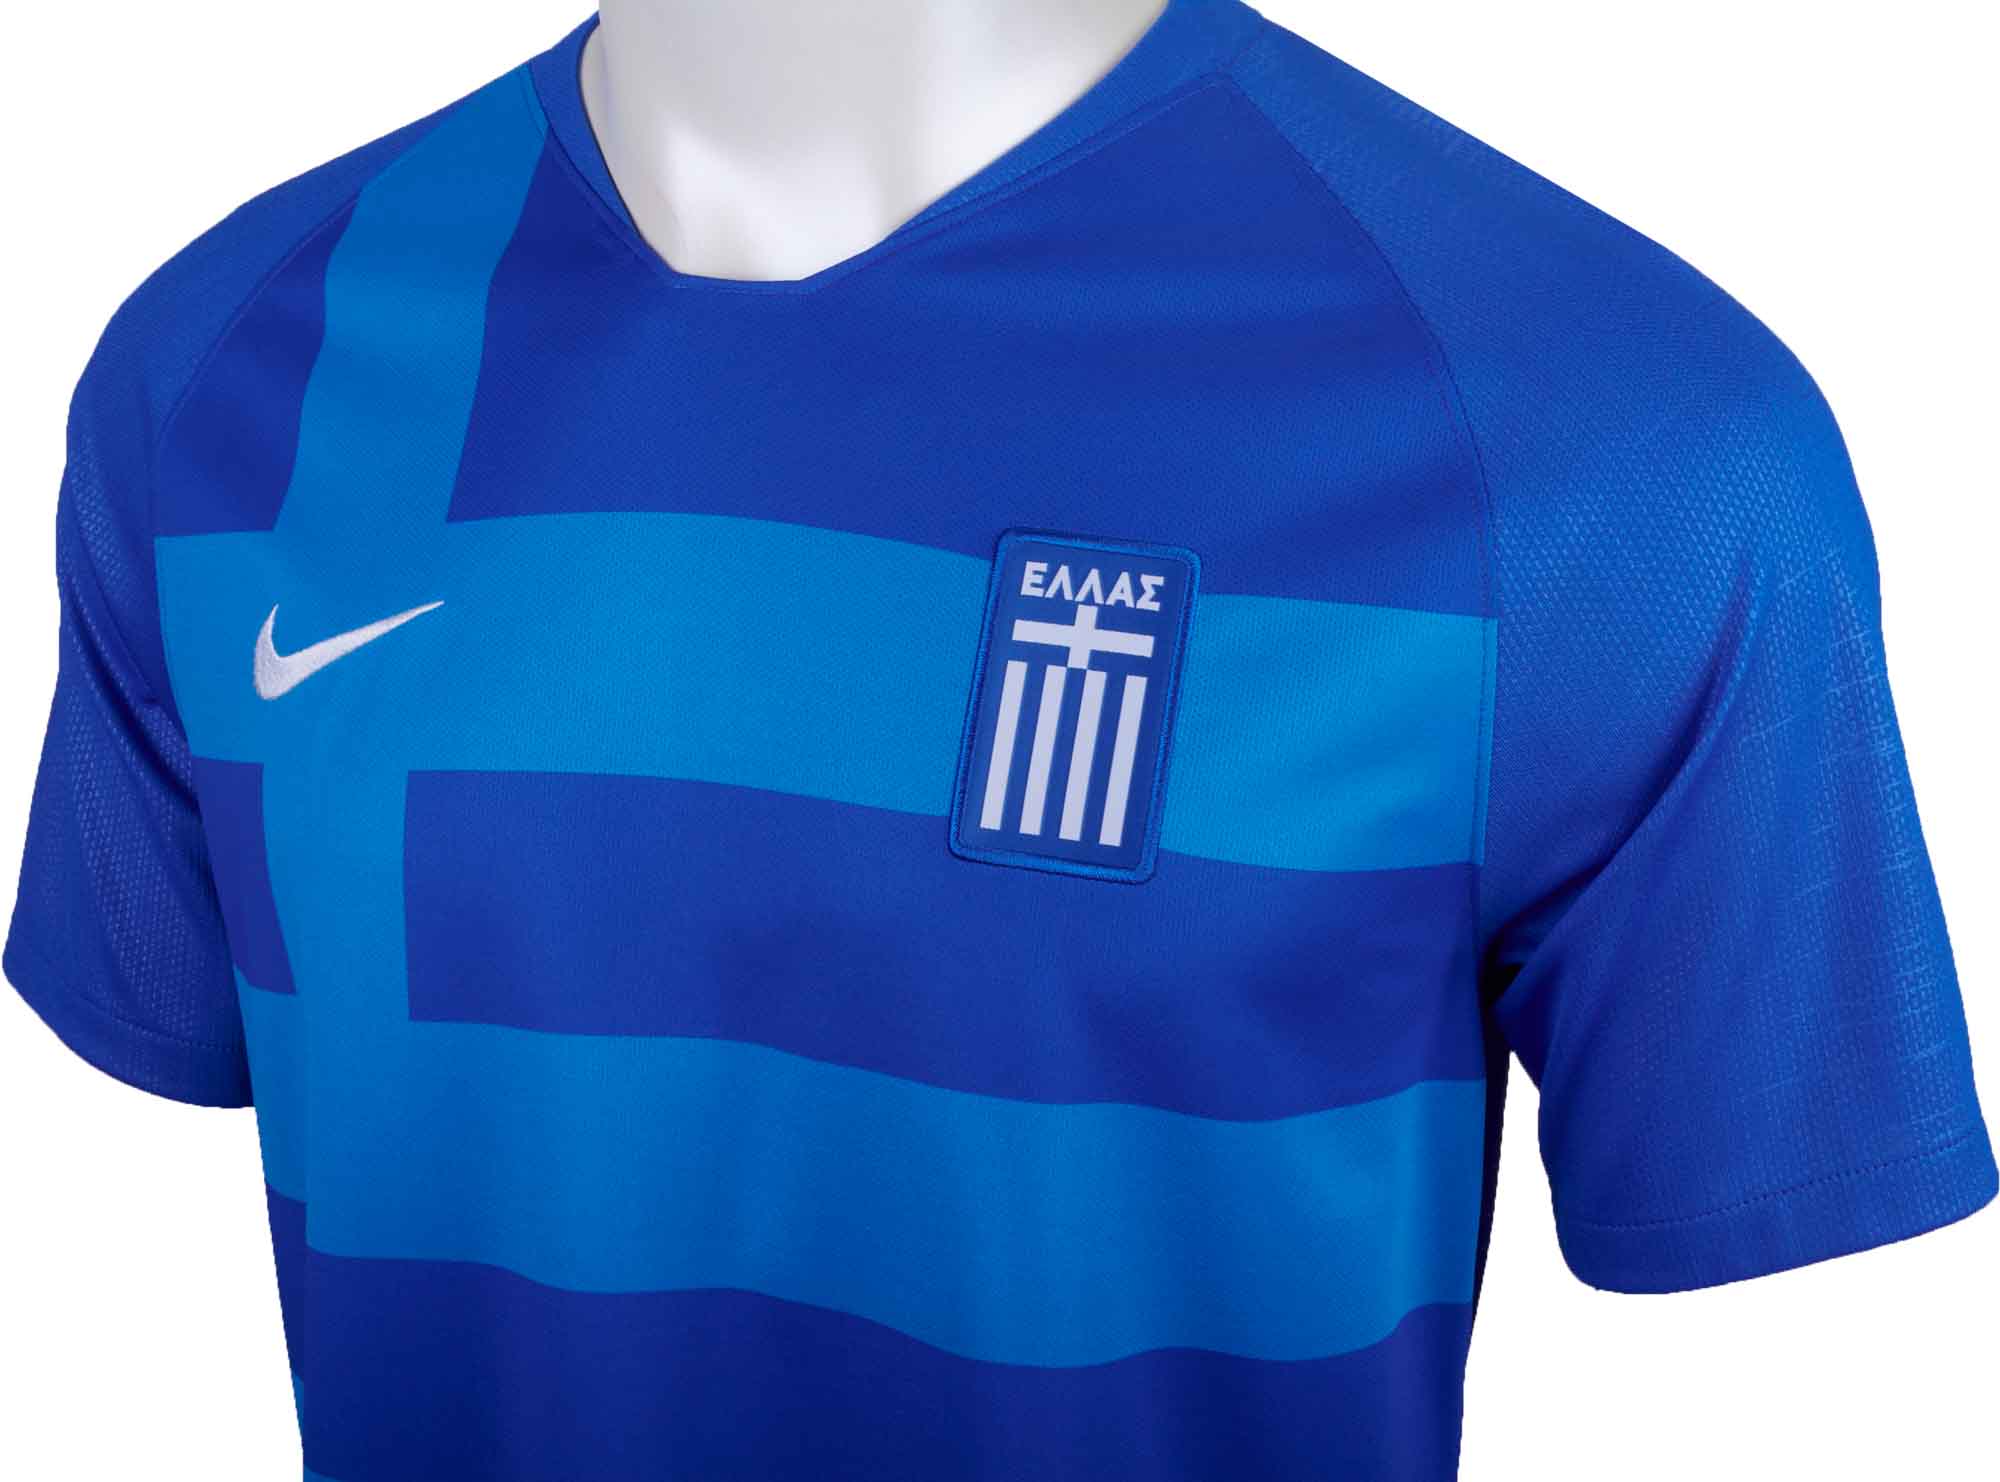 greece jersey